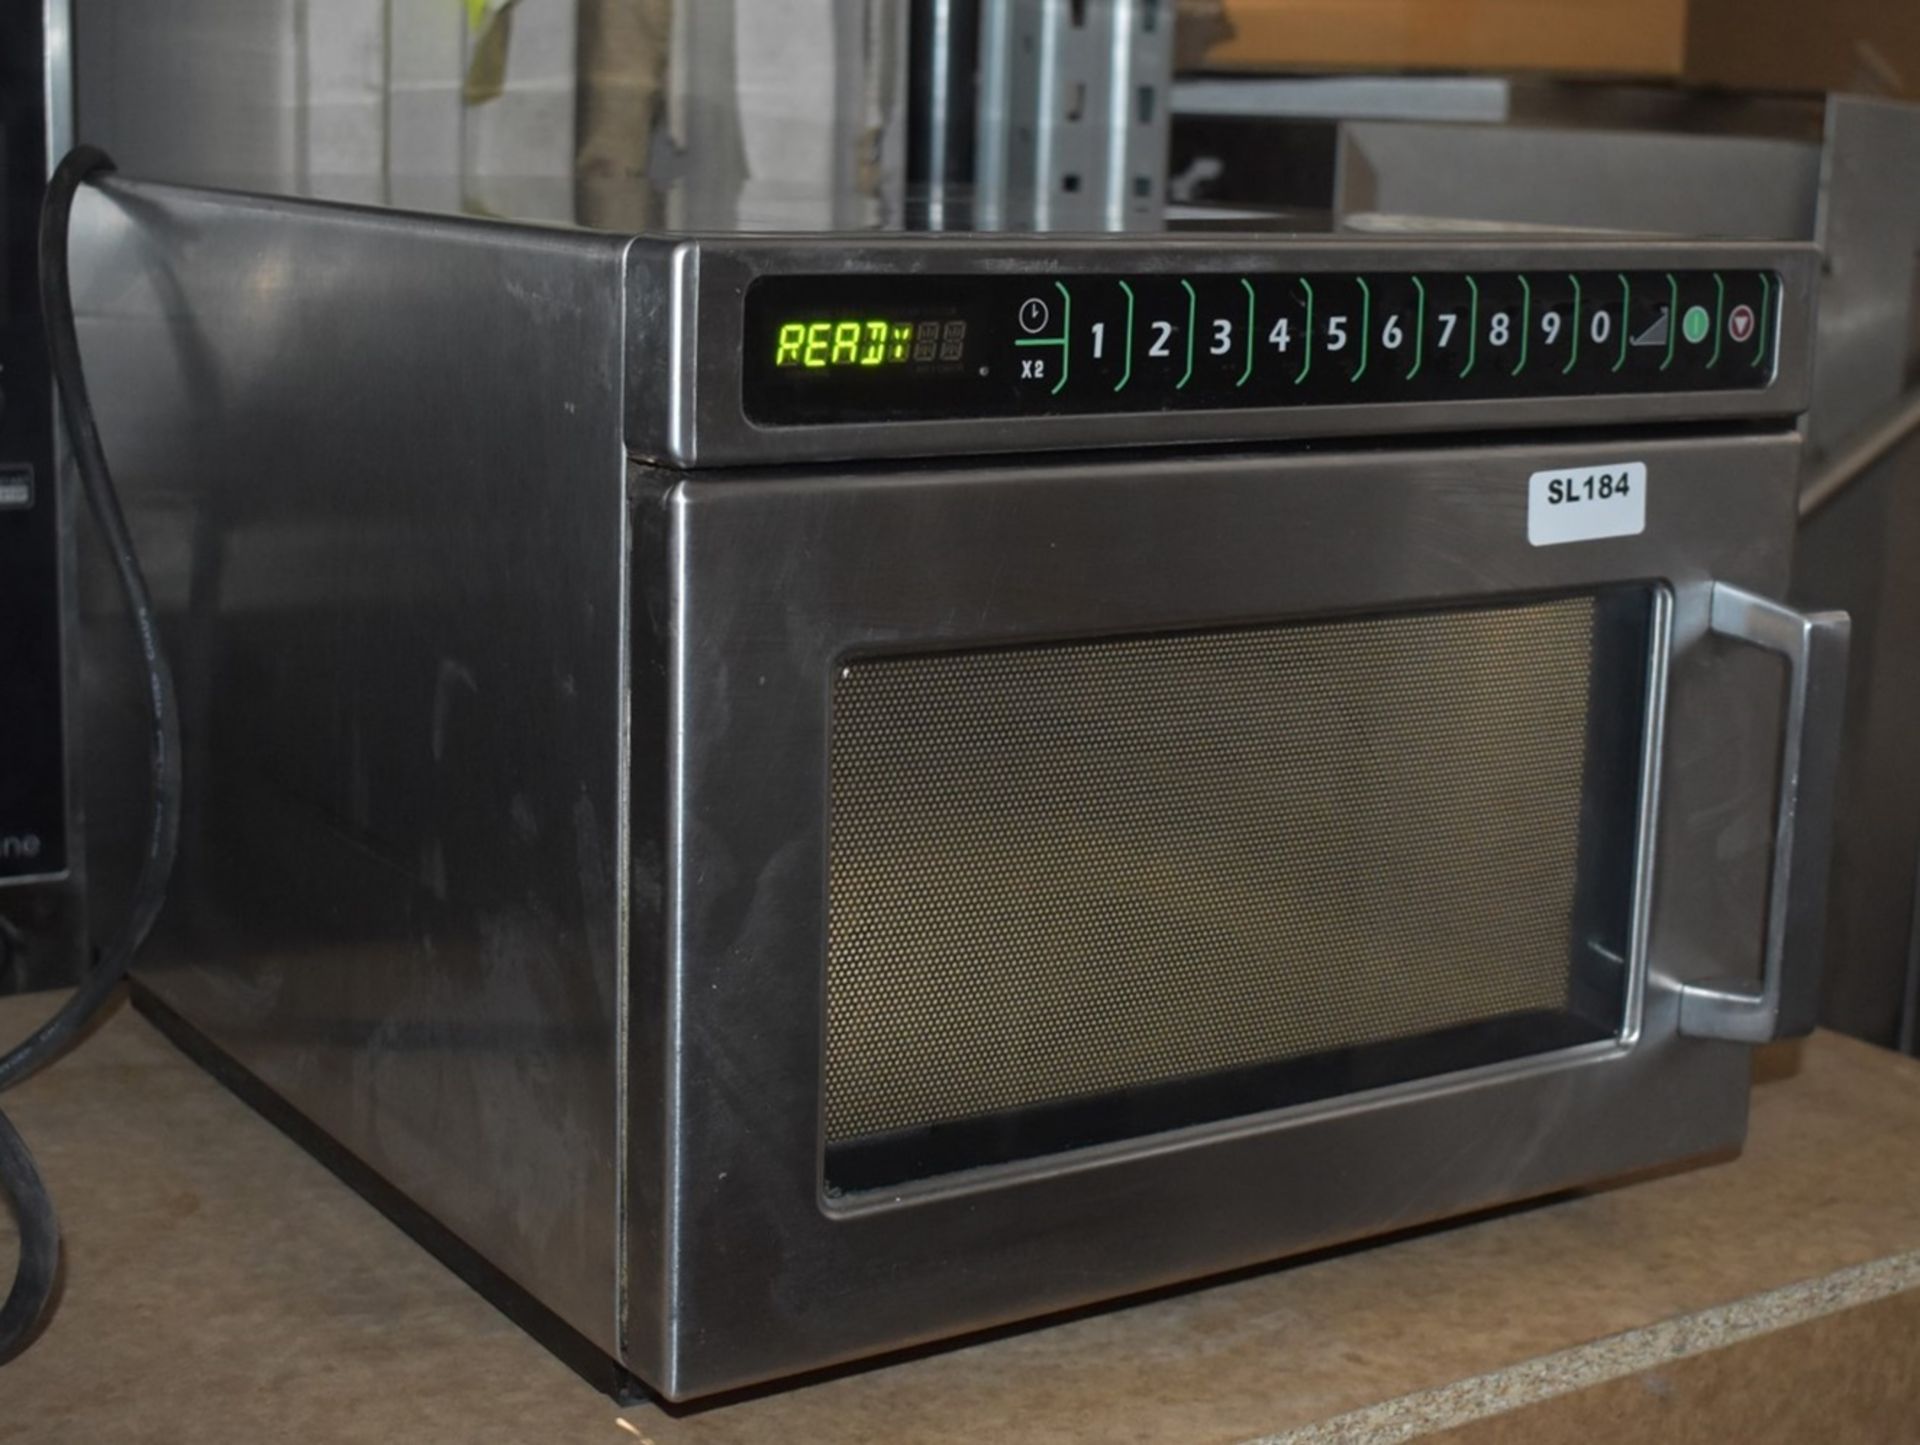 1 x Menumaster Commercial Microwave Oven - Model DEC14E2U - 1.4kW, 13A, 17Ltr - 2017 Model - - Image 2 of 13